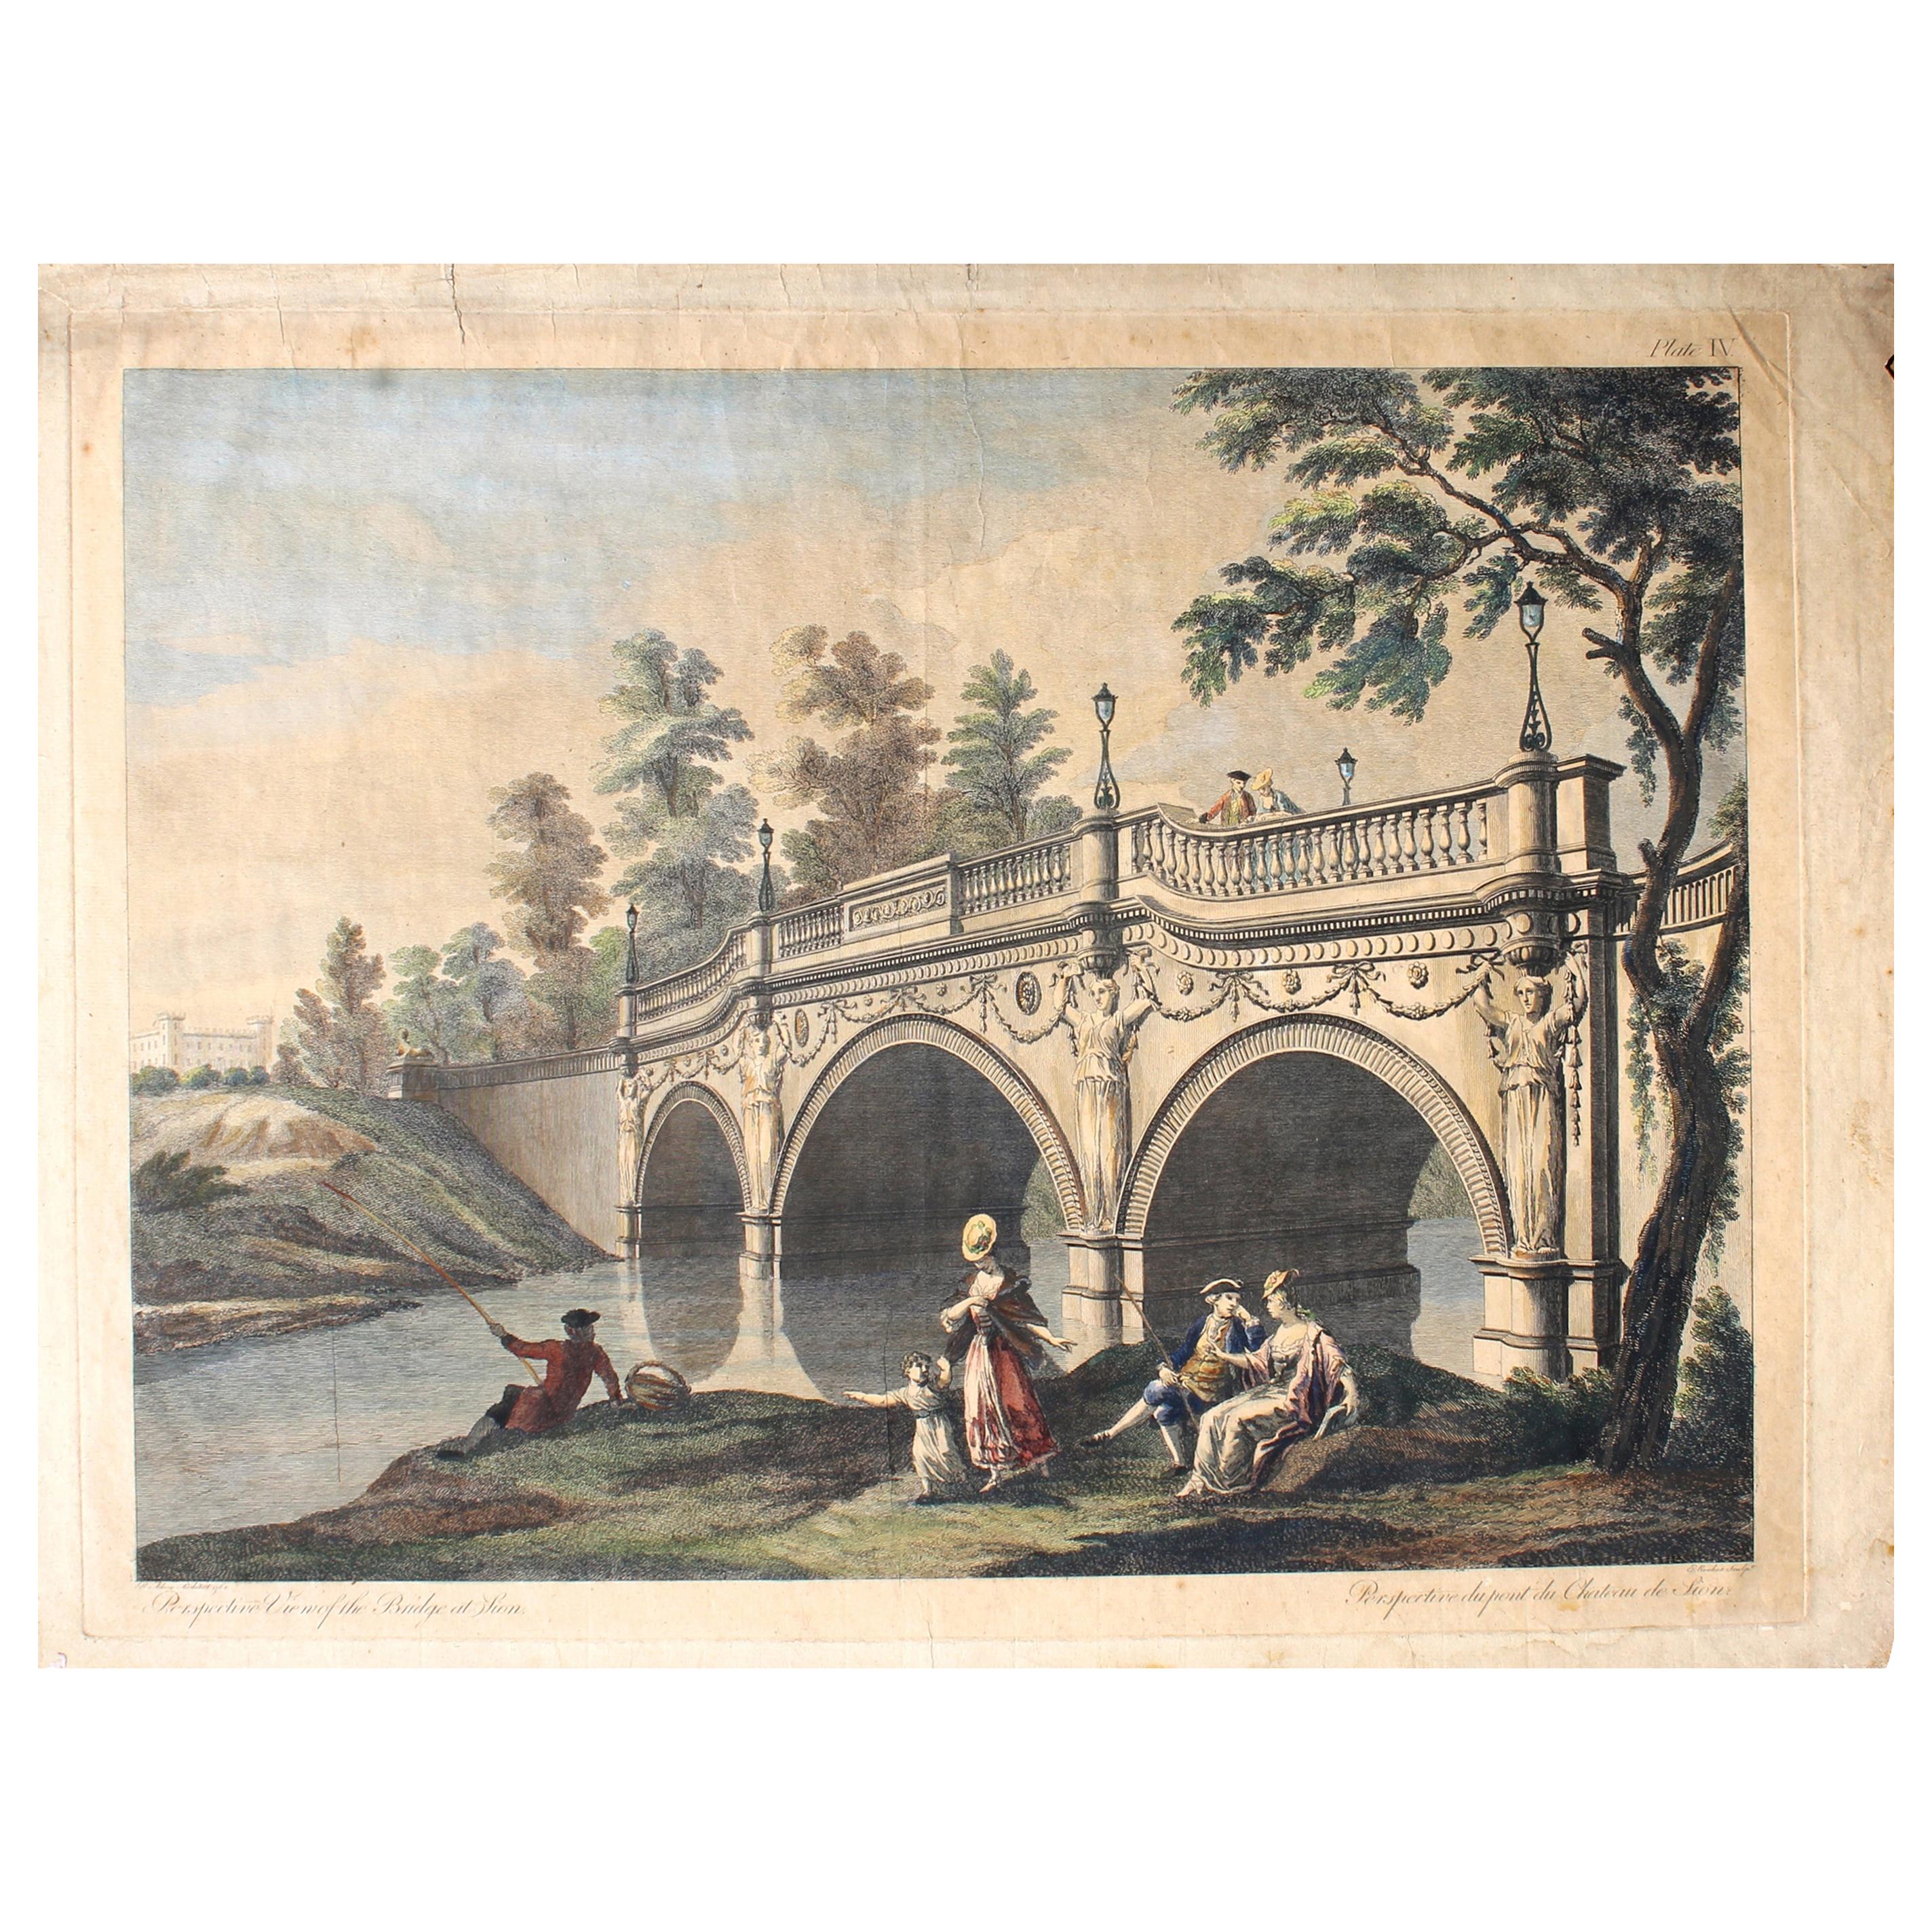 Robert Adam Architecte 1768 "Perspective View of The Bridge at Lion" Gravure rare en vente